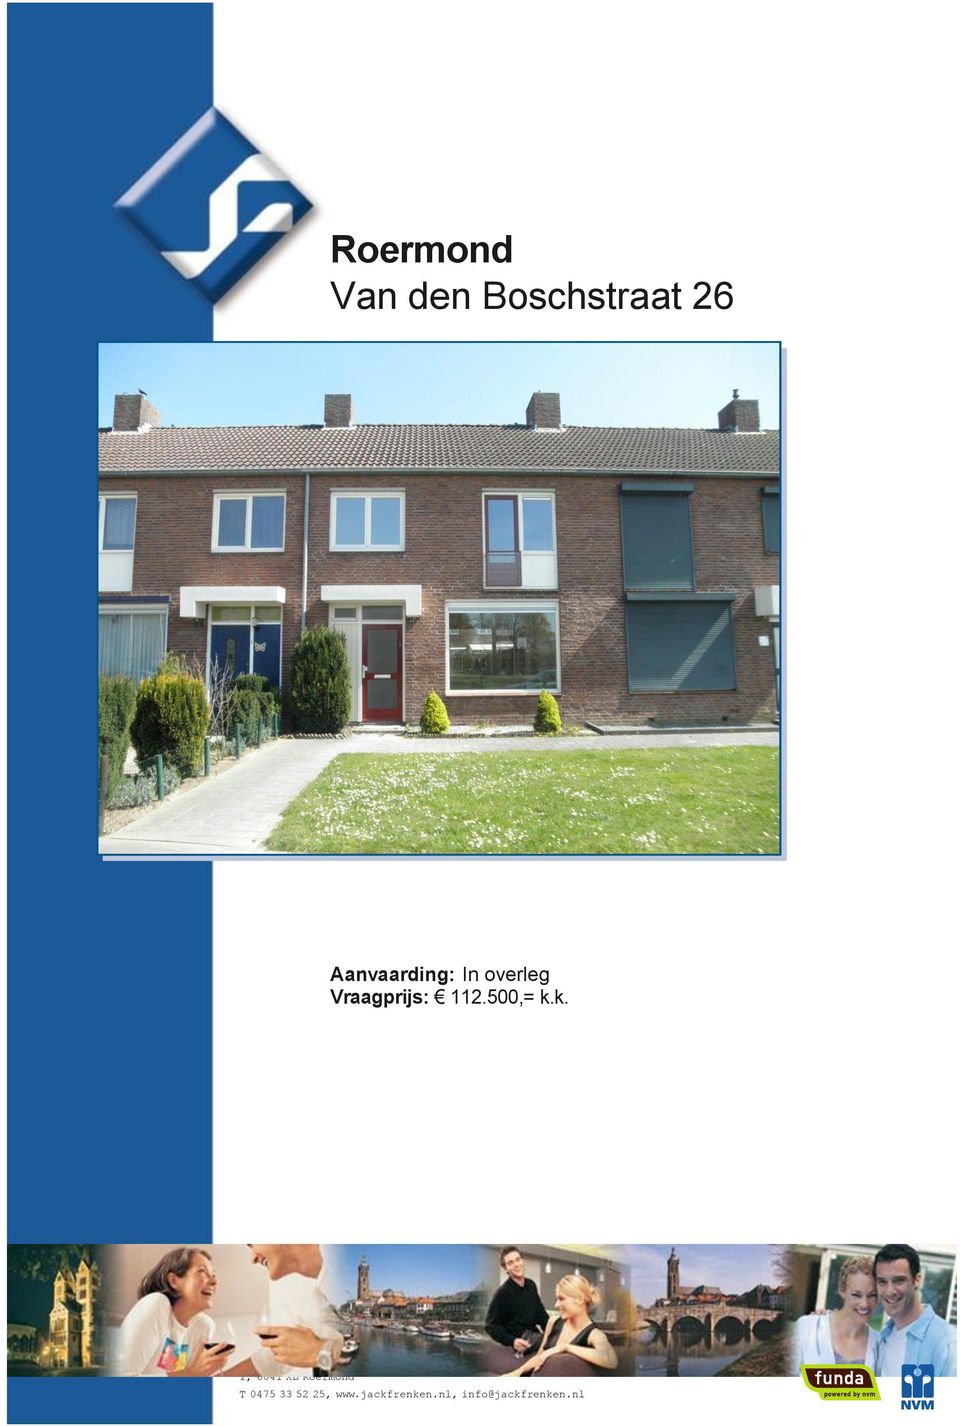 Reinaldstraat 1, 6041 XB Roermond T 0475 33 52 25, www.jackfrenken.